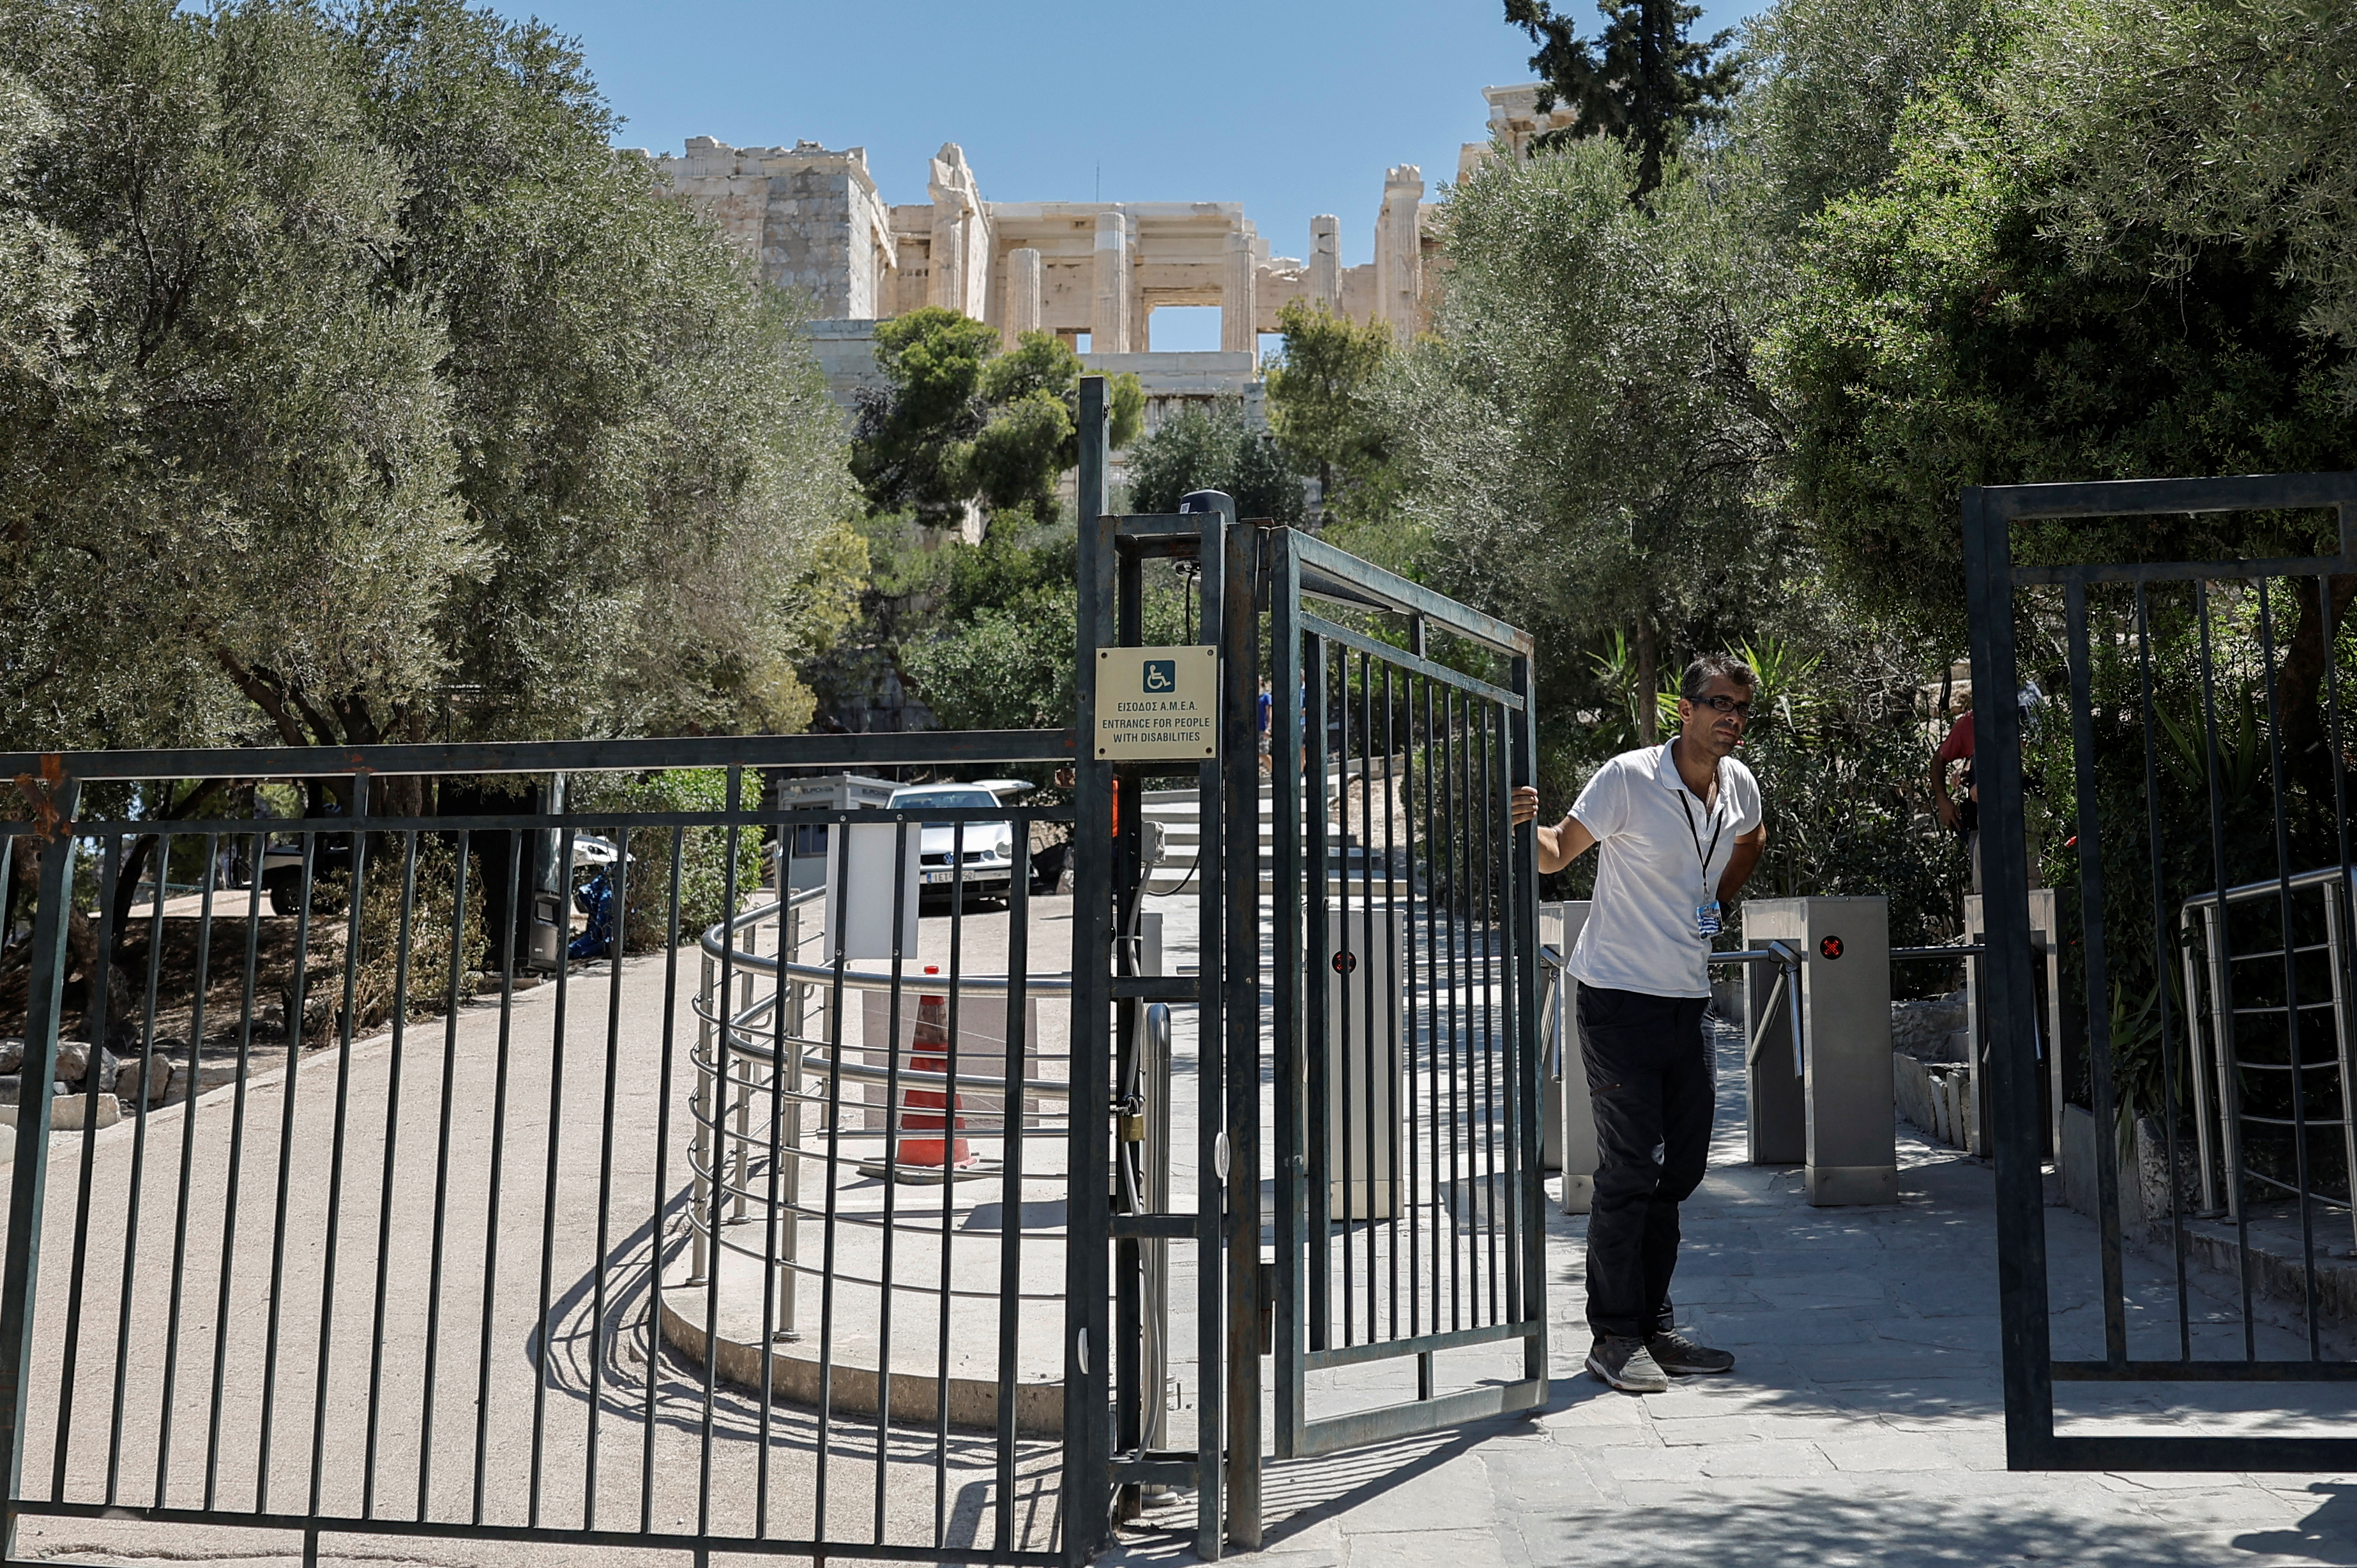 Acropolis temporarily closes due to heatwave